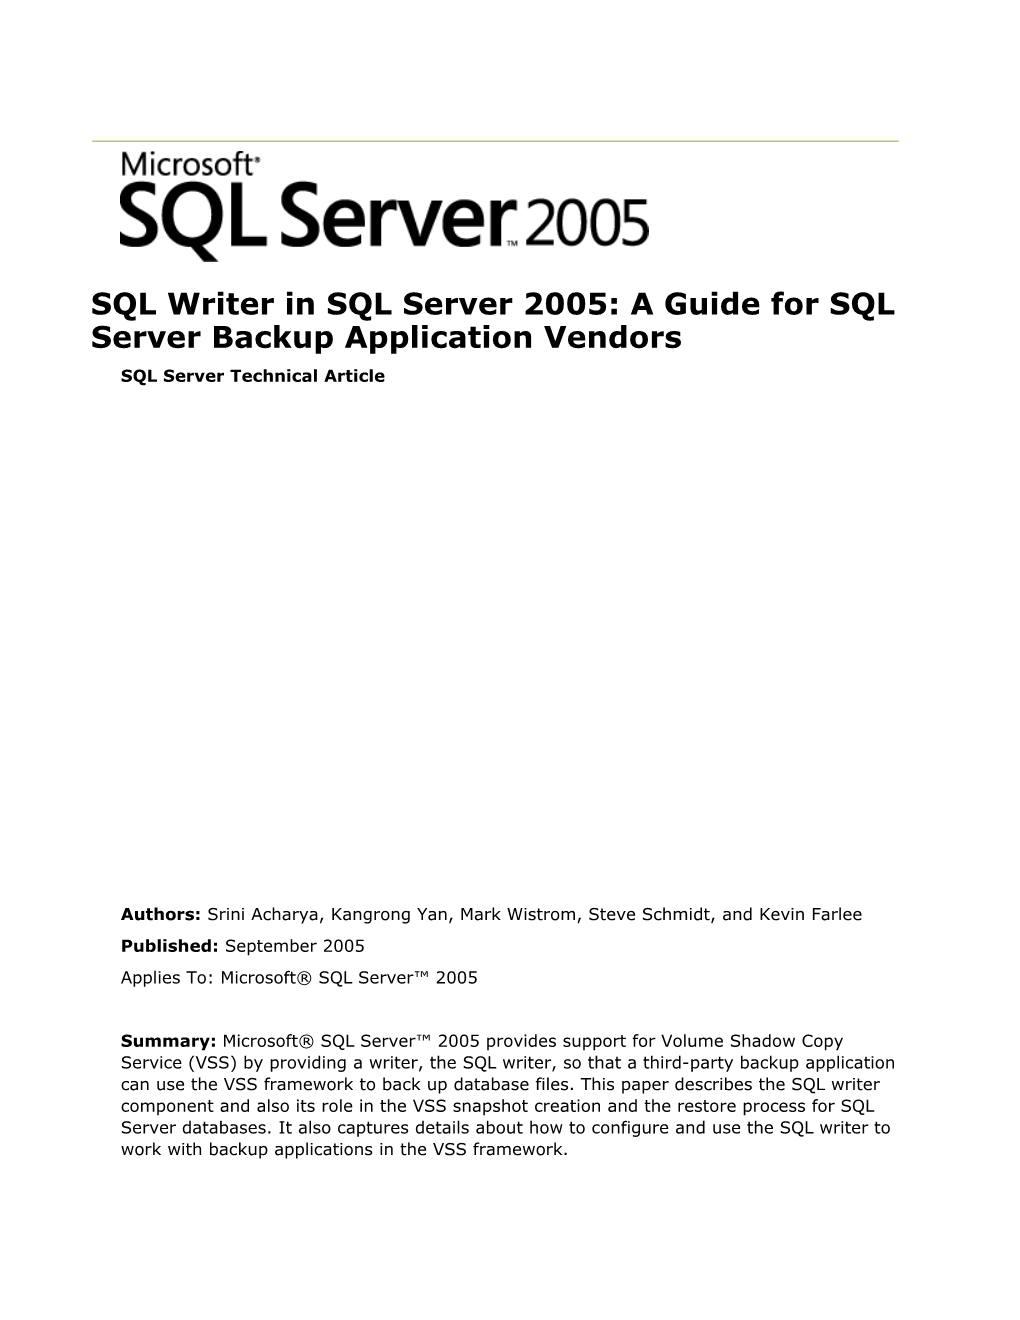 Applies To: Microsoft SQL Server 2005